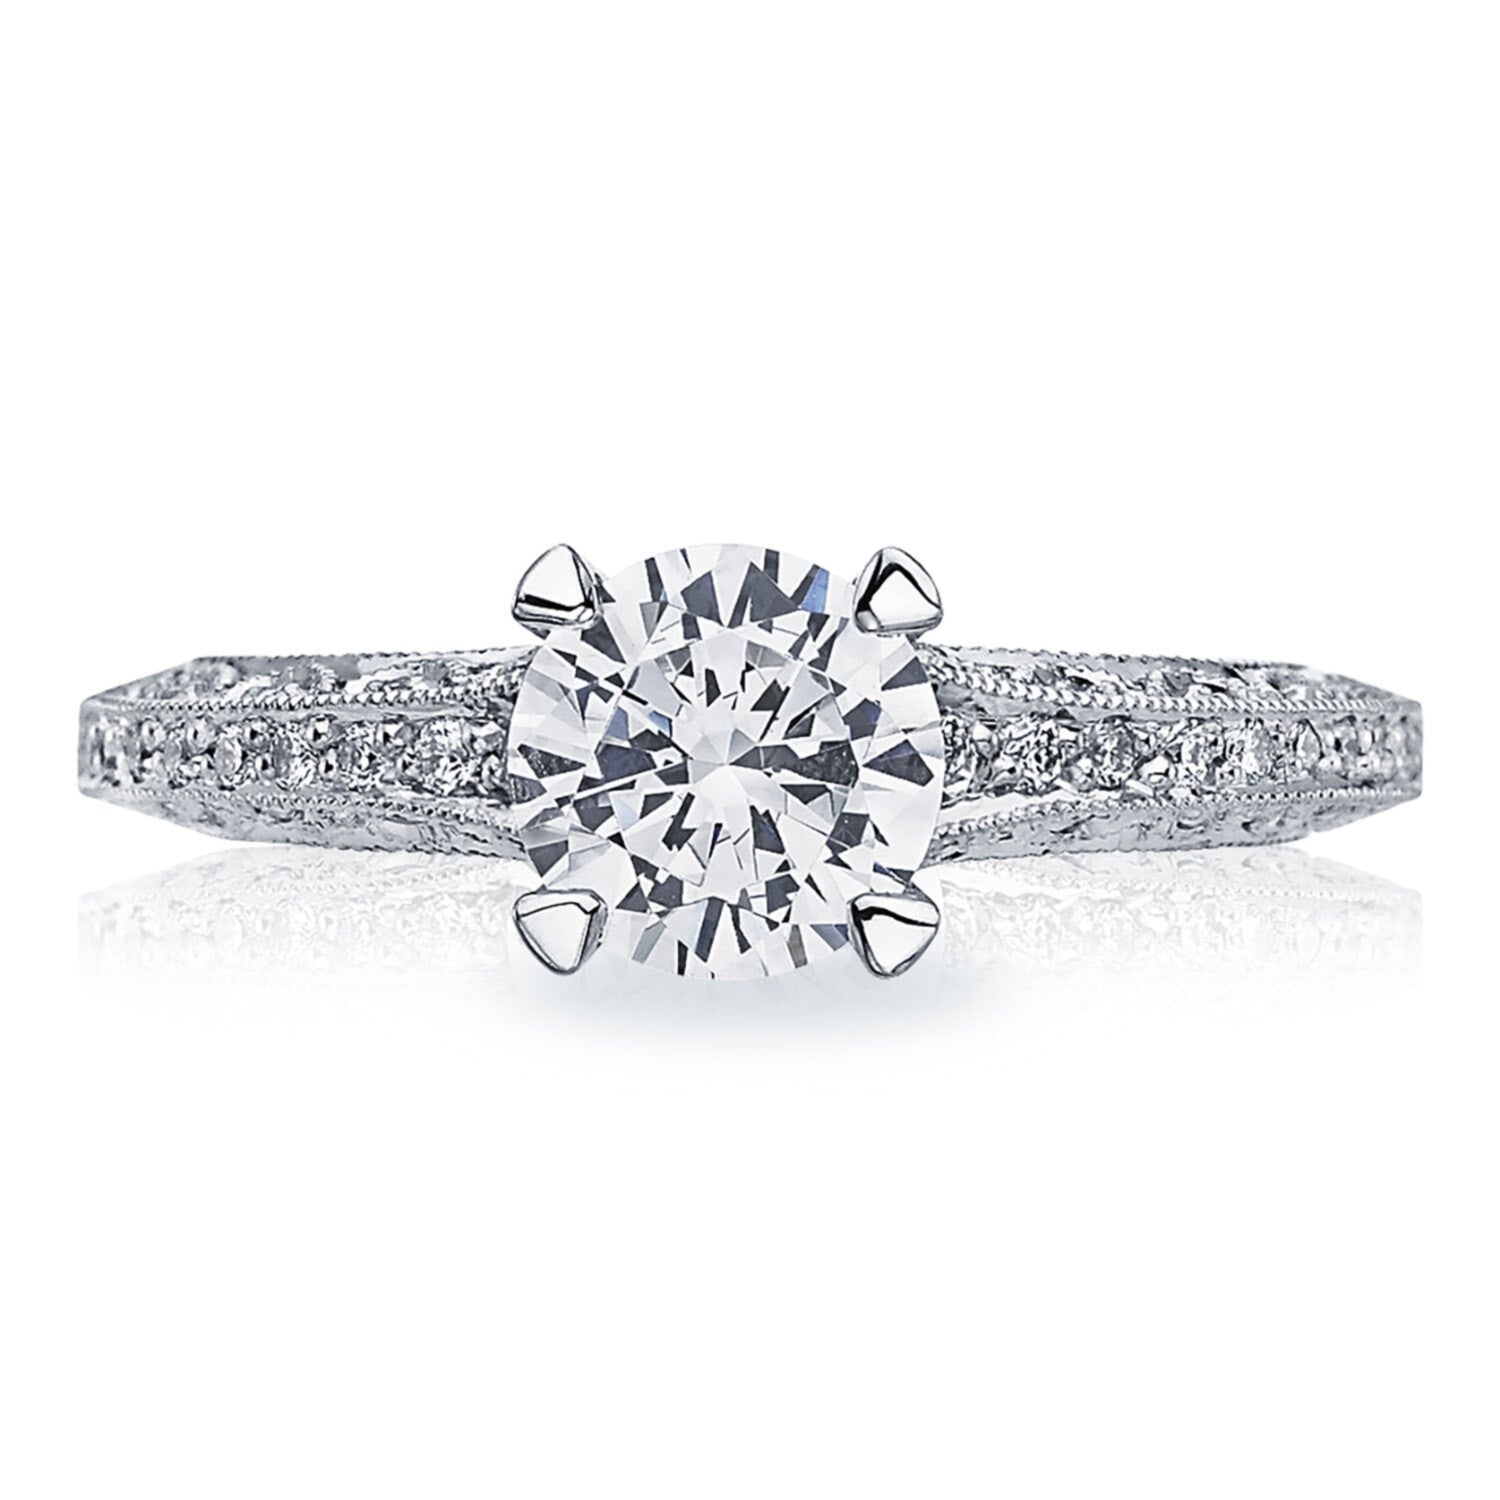 Tacori Classic Crescent 18KW Round Diamond Engagement Ring